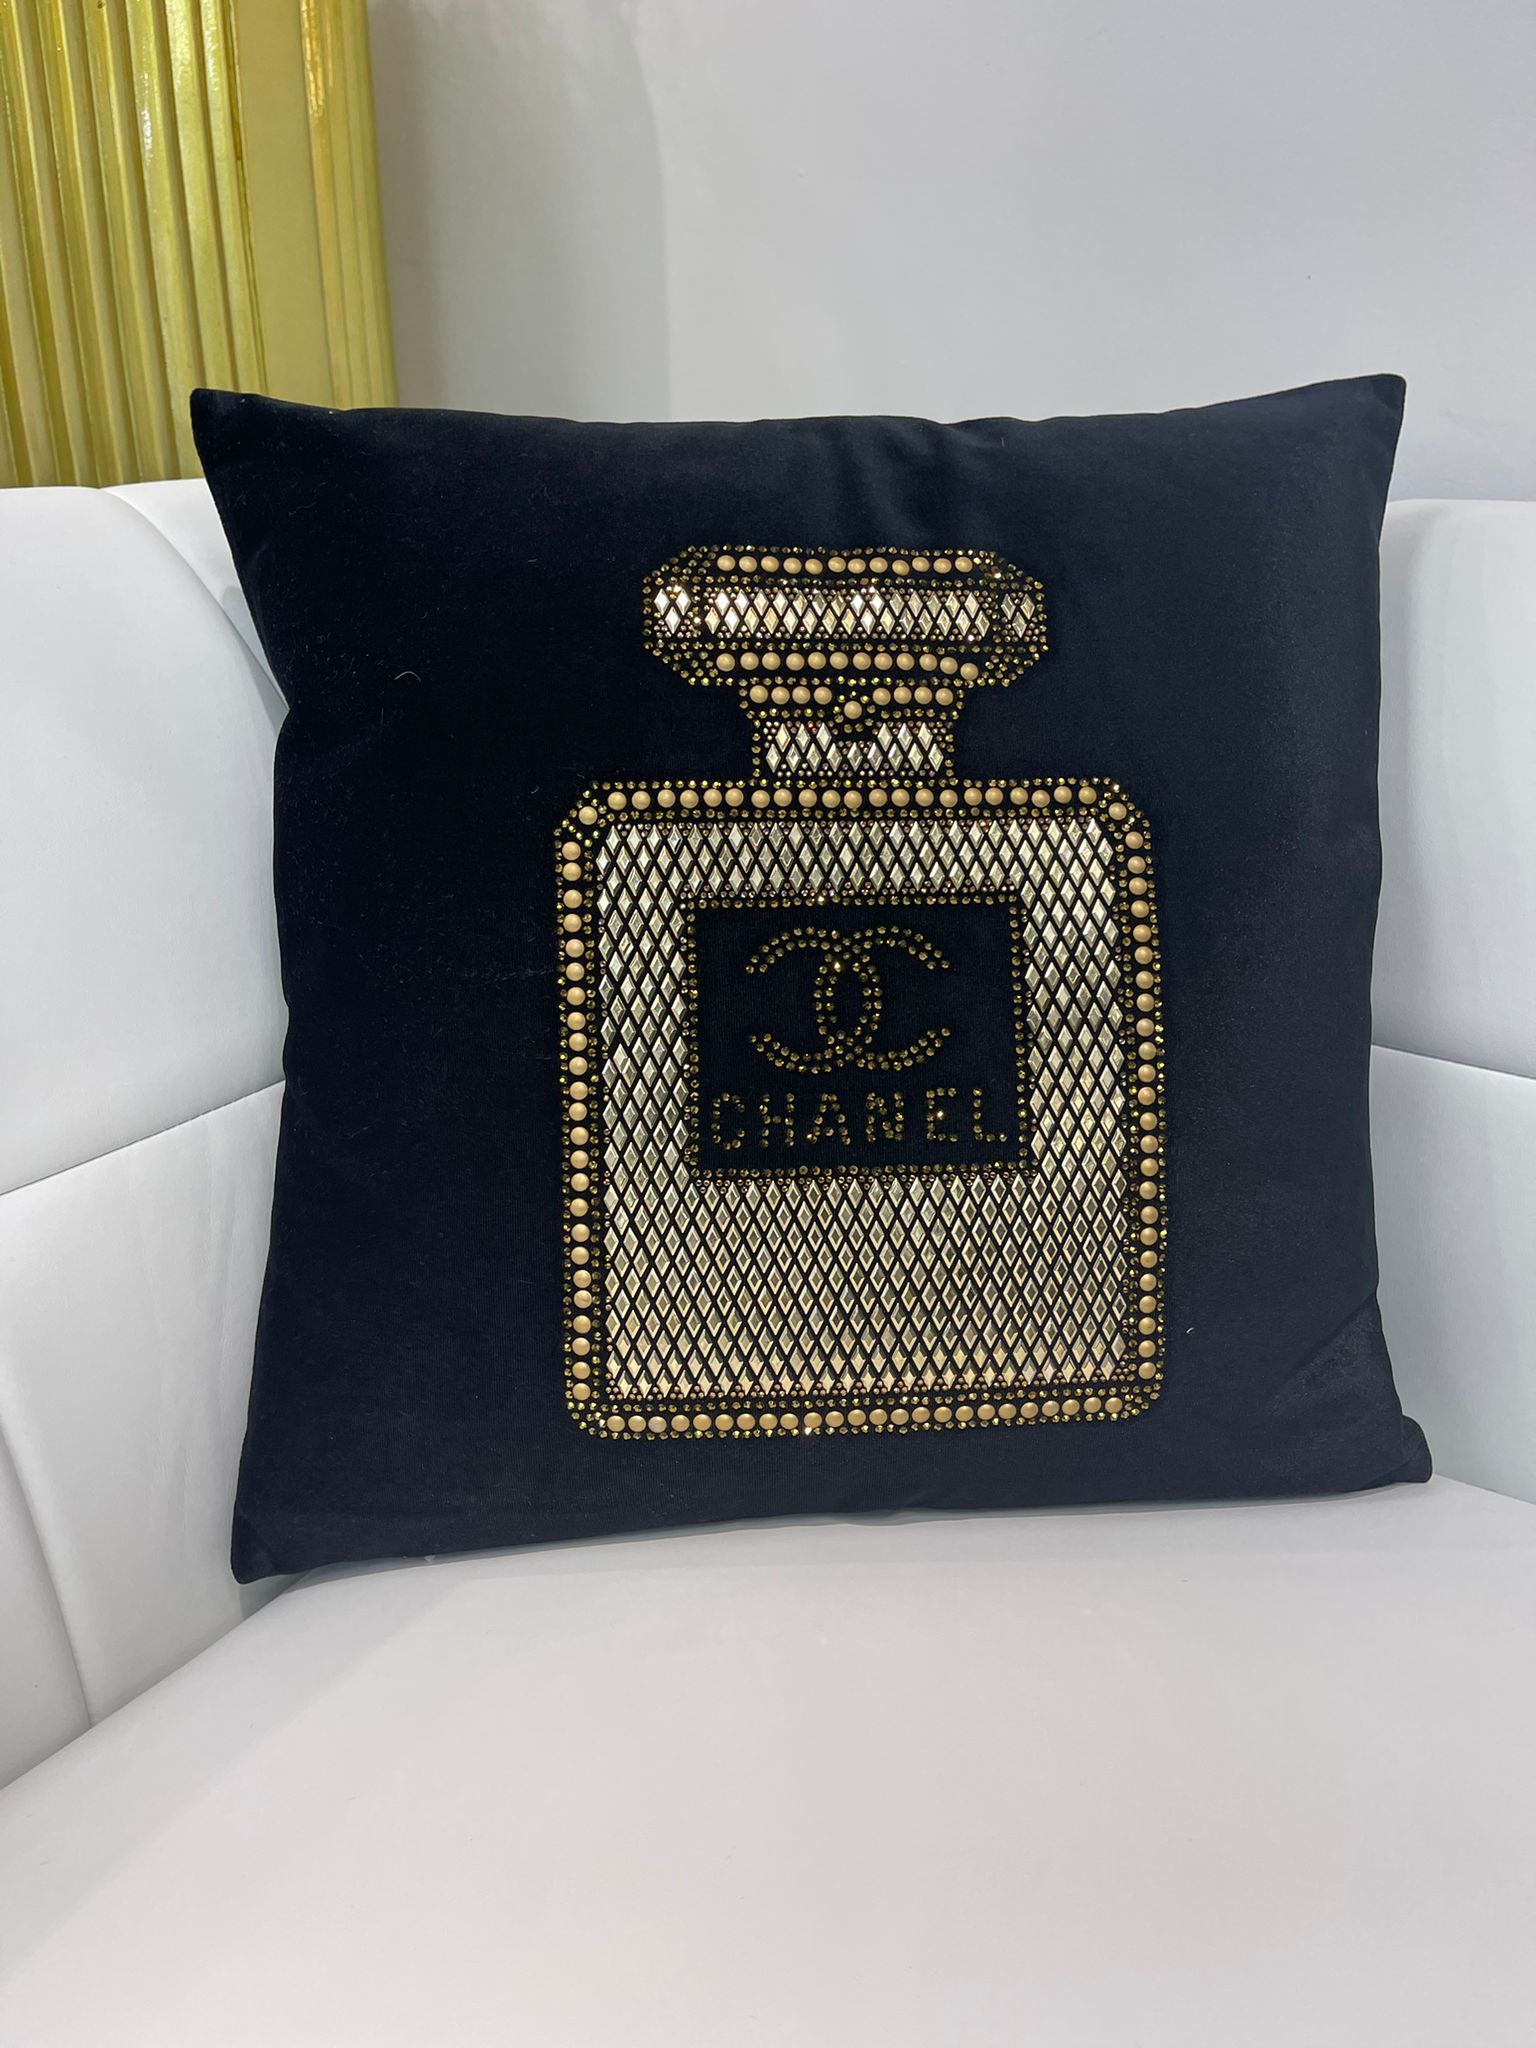 Chanel pillow